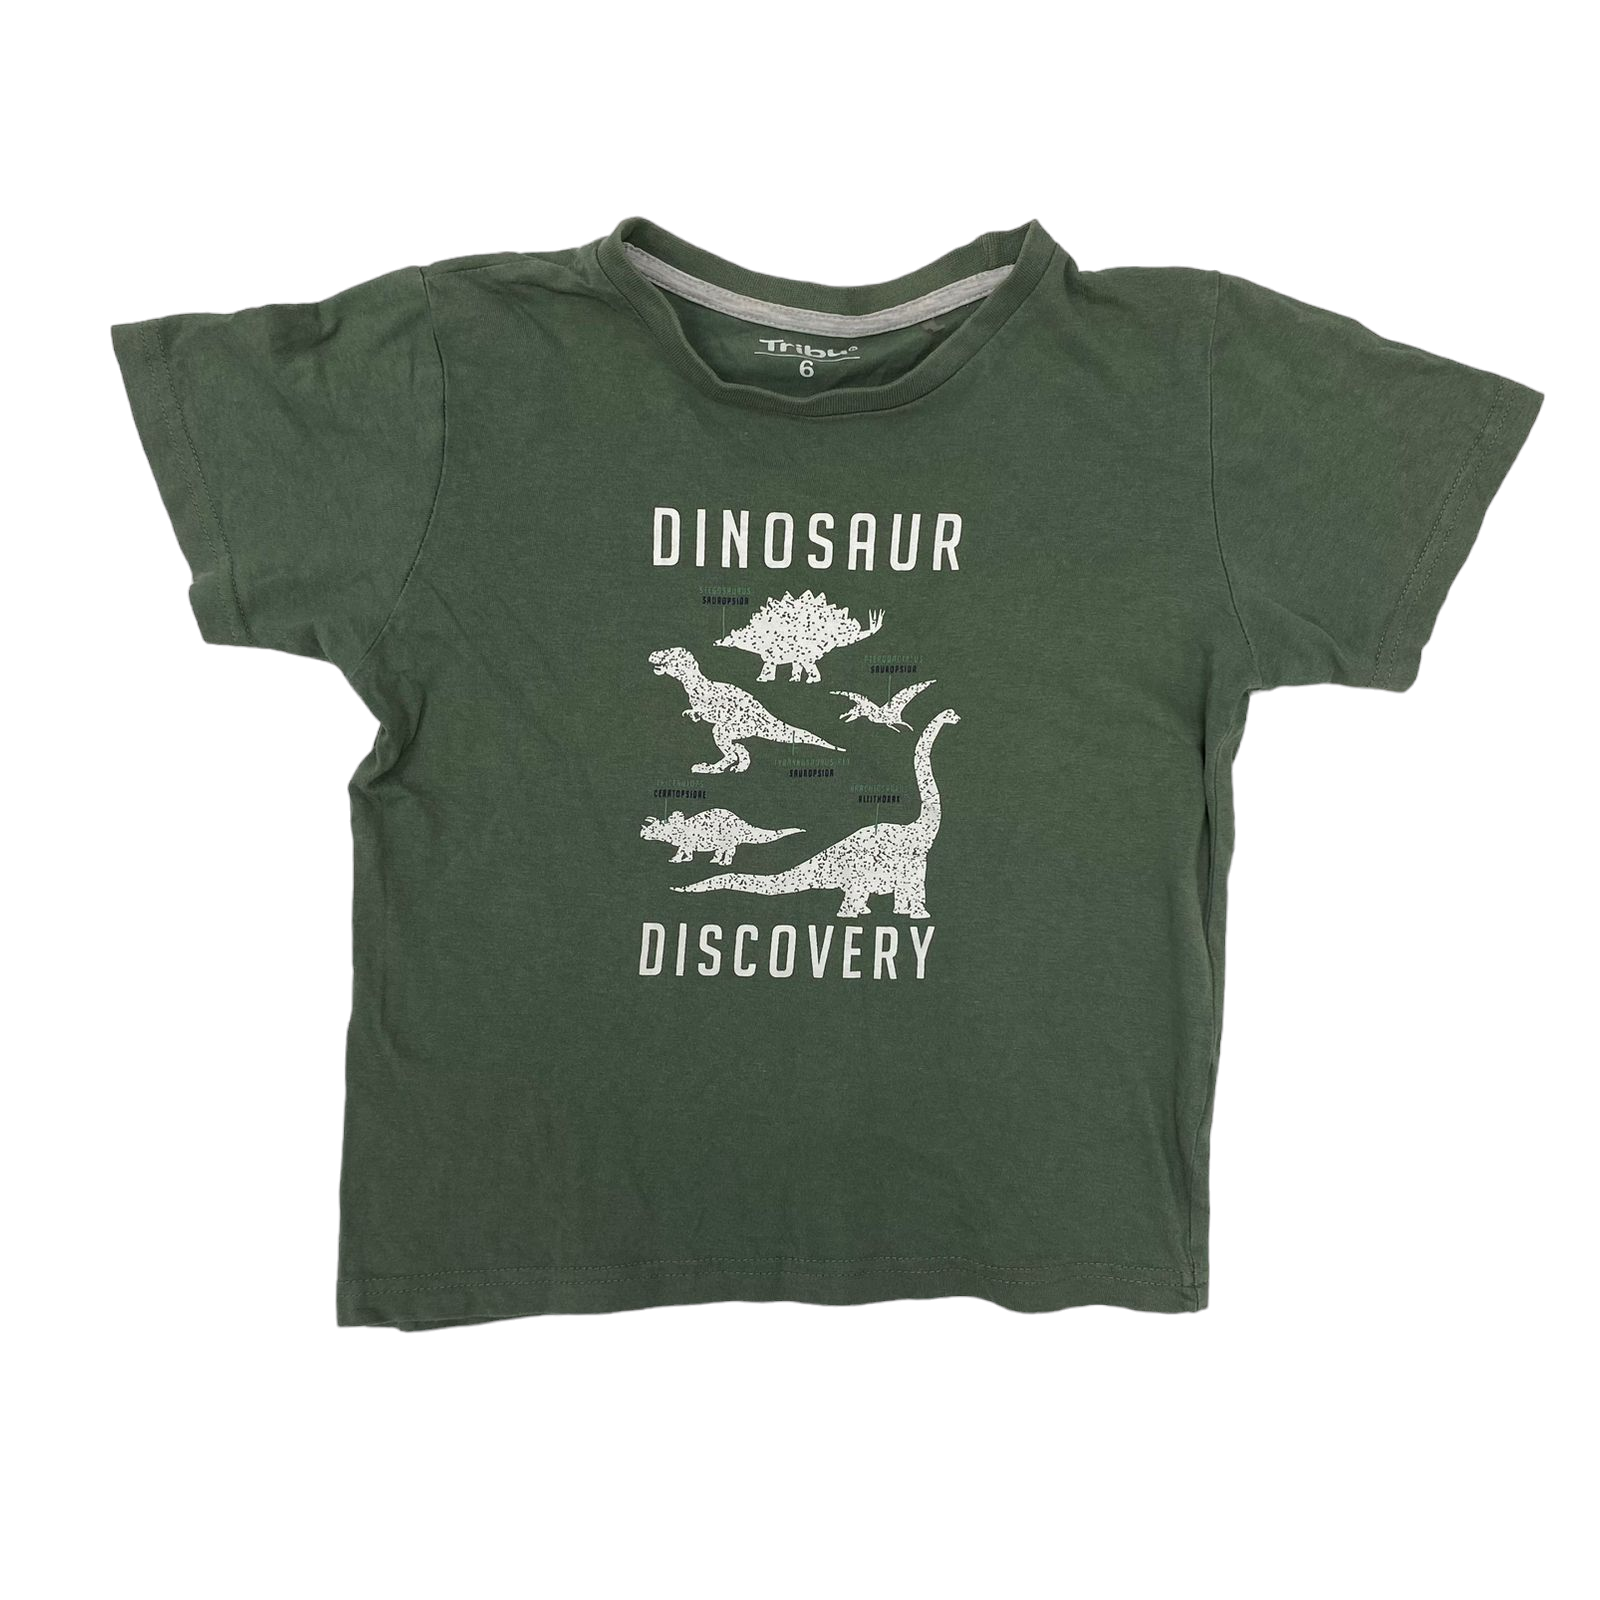 Polera verde militar con dinosaurios blancos "Dinosaur"